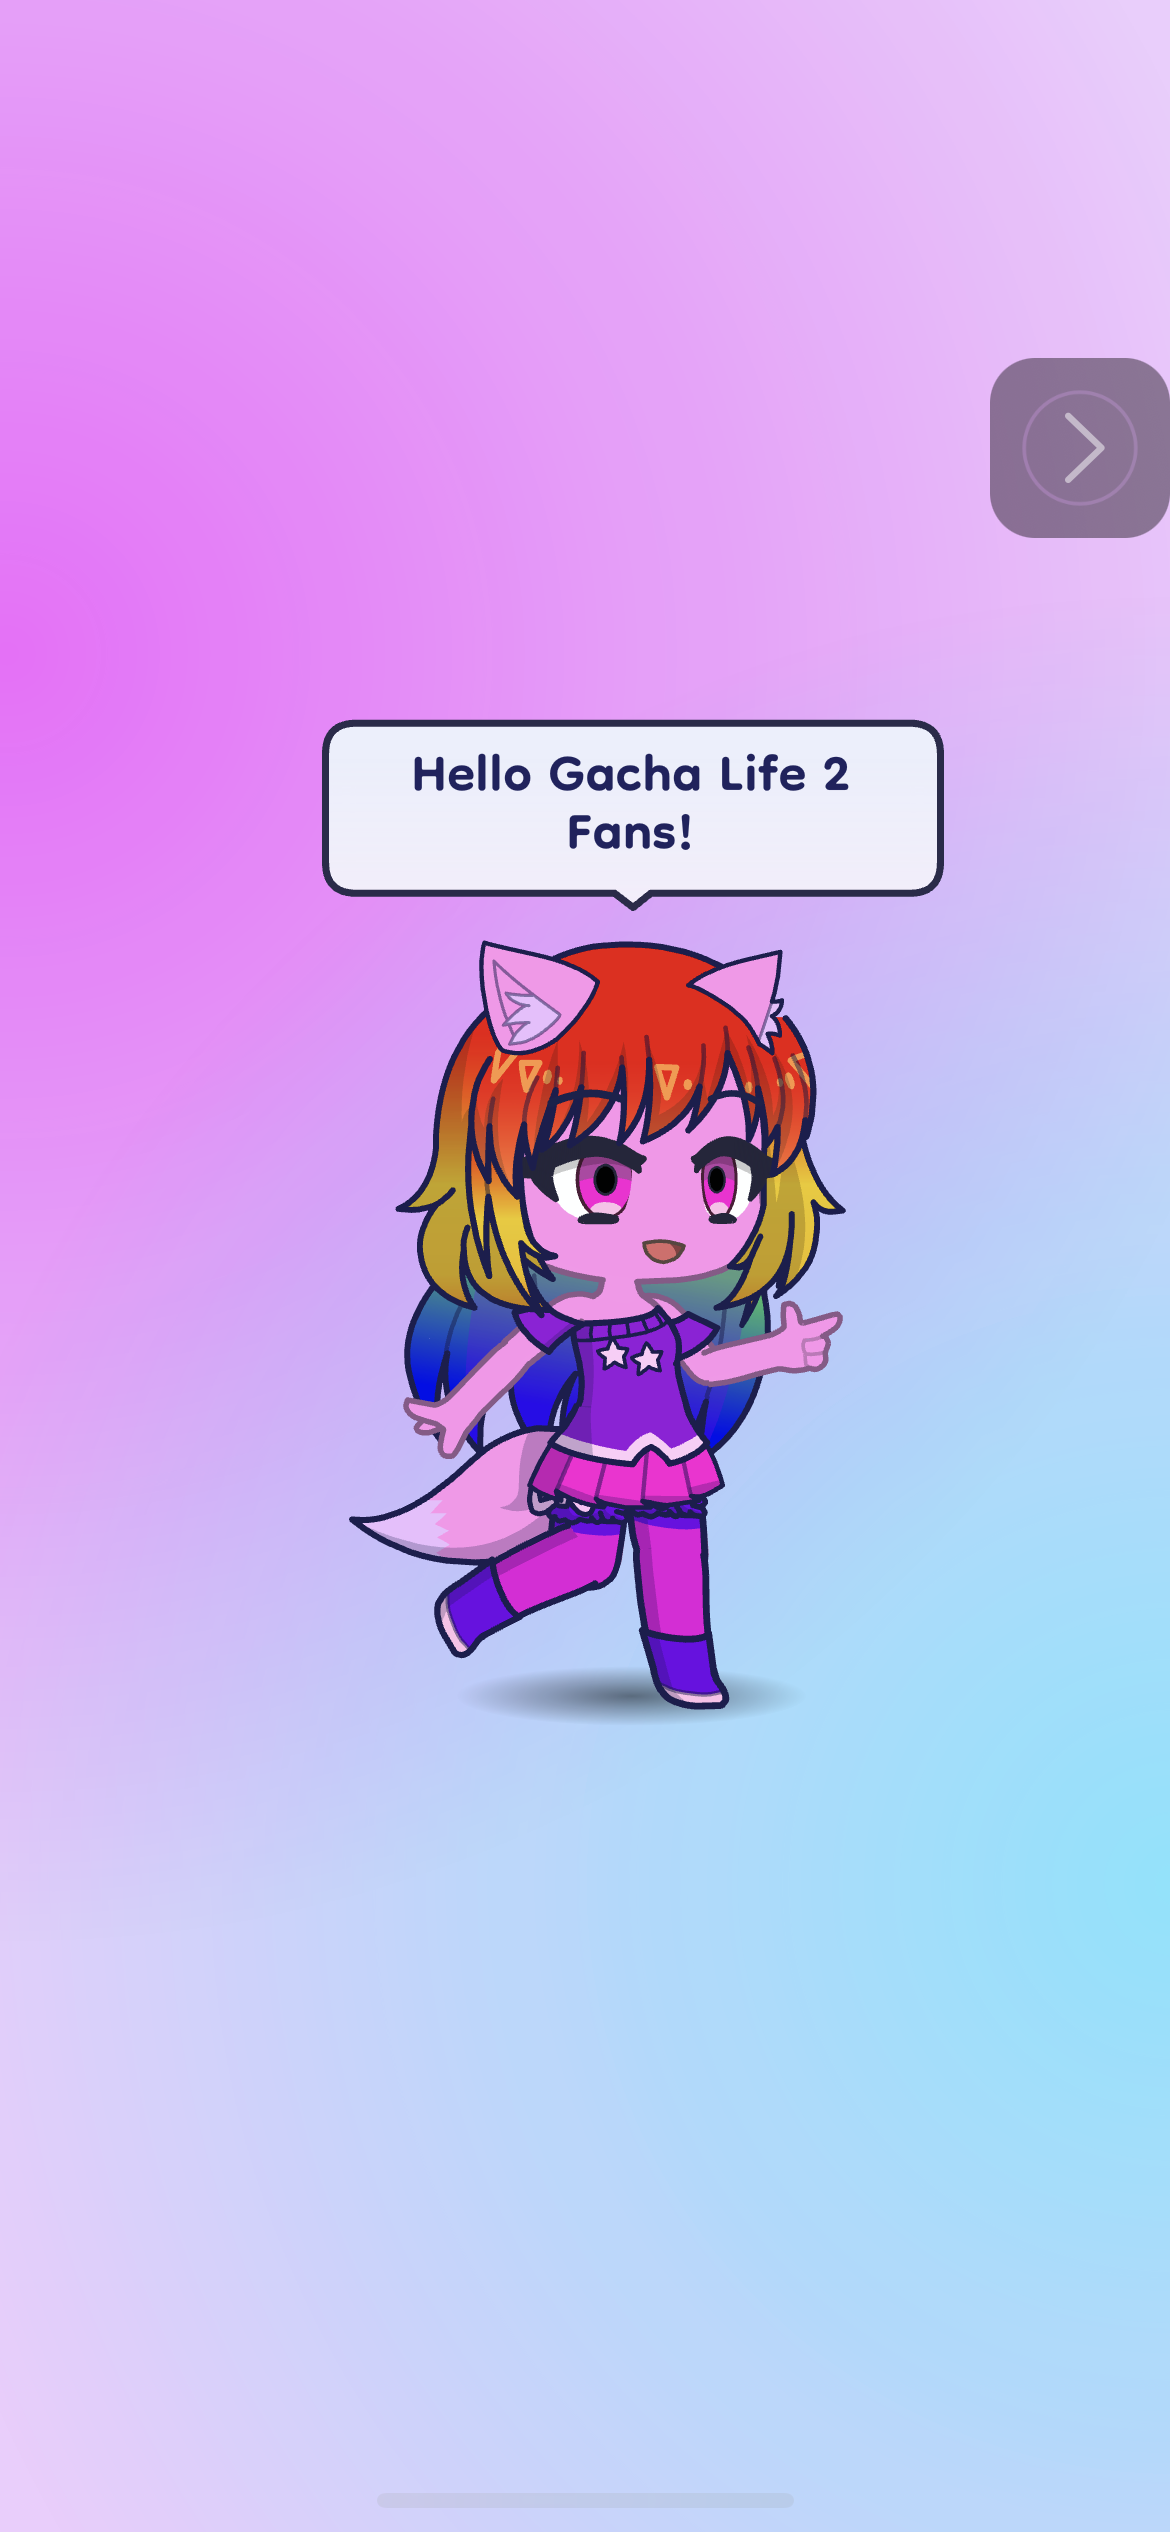 GACHA LIFE 2 FIRST UPDATE 